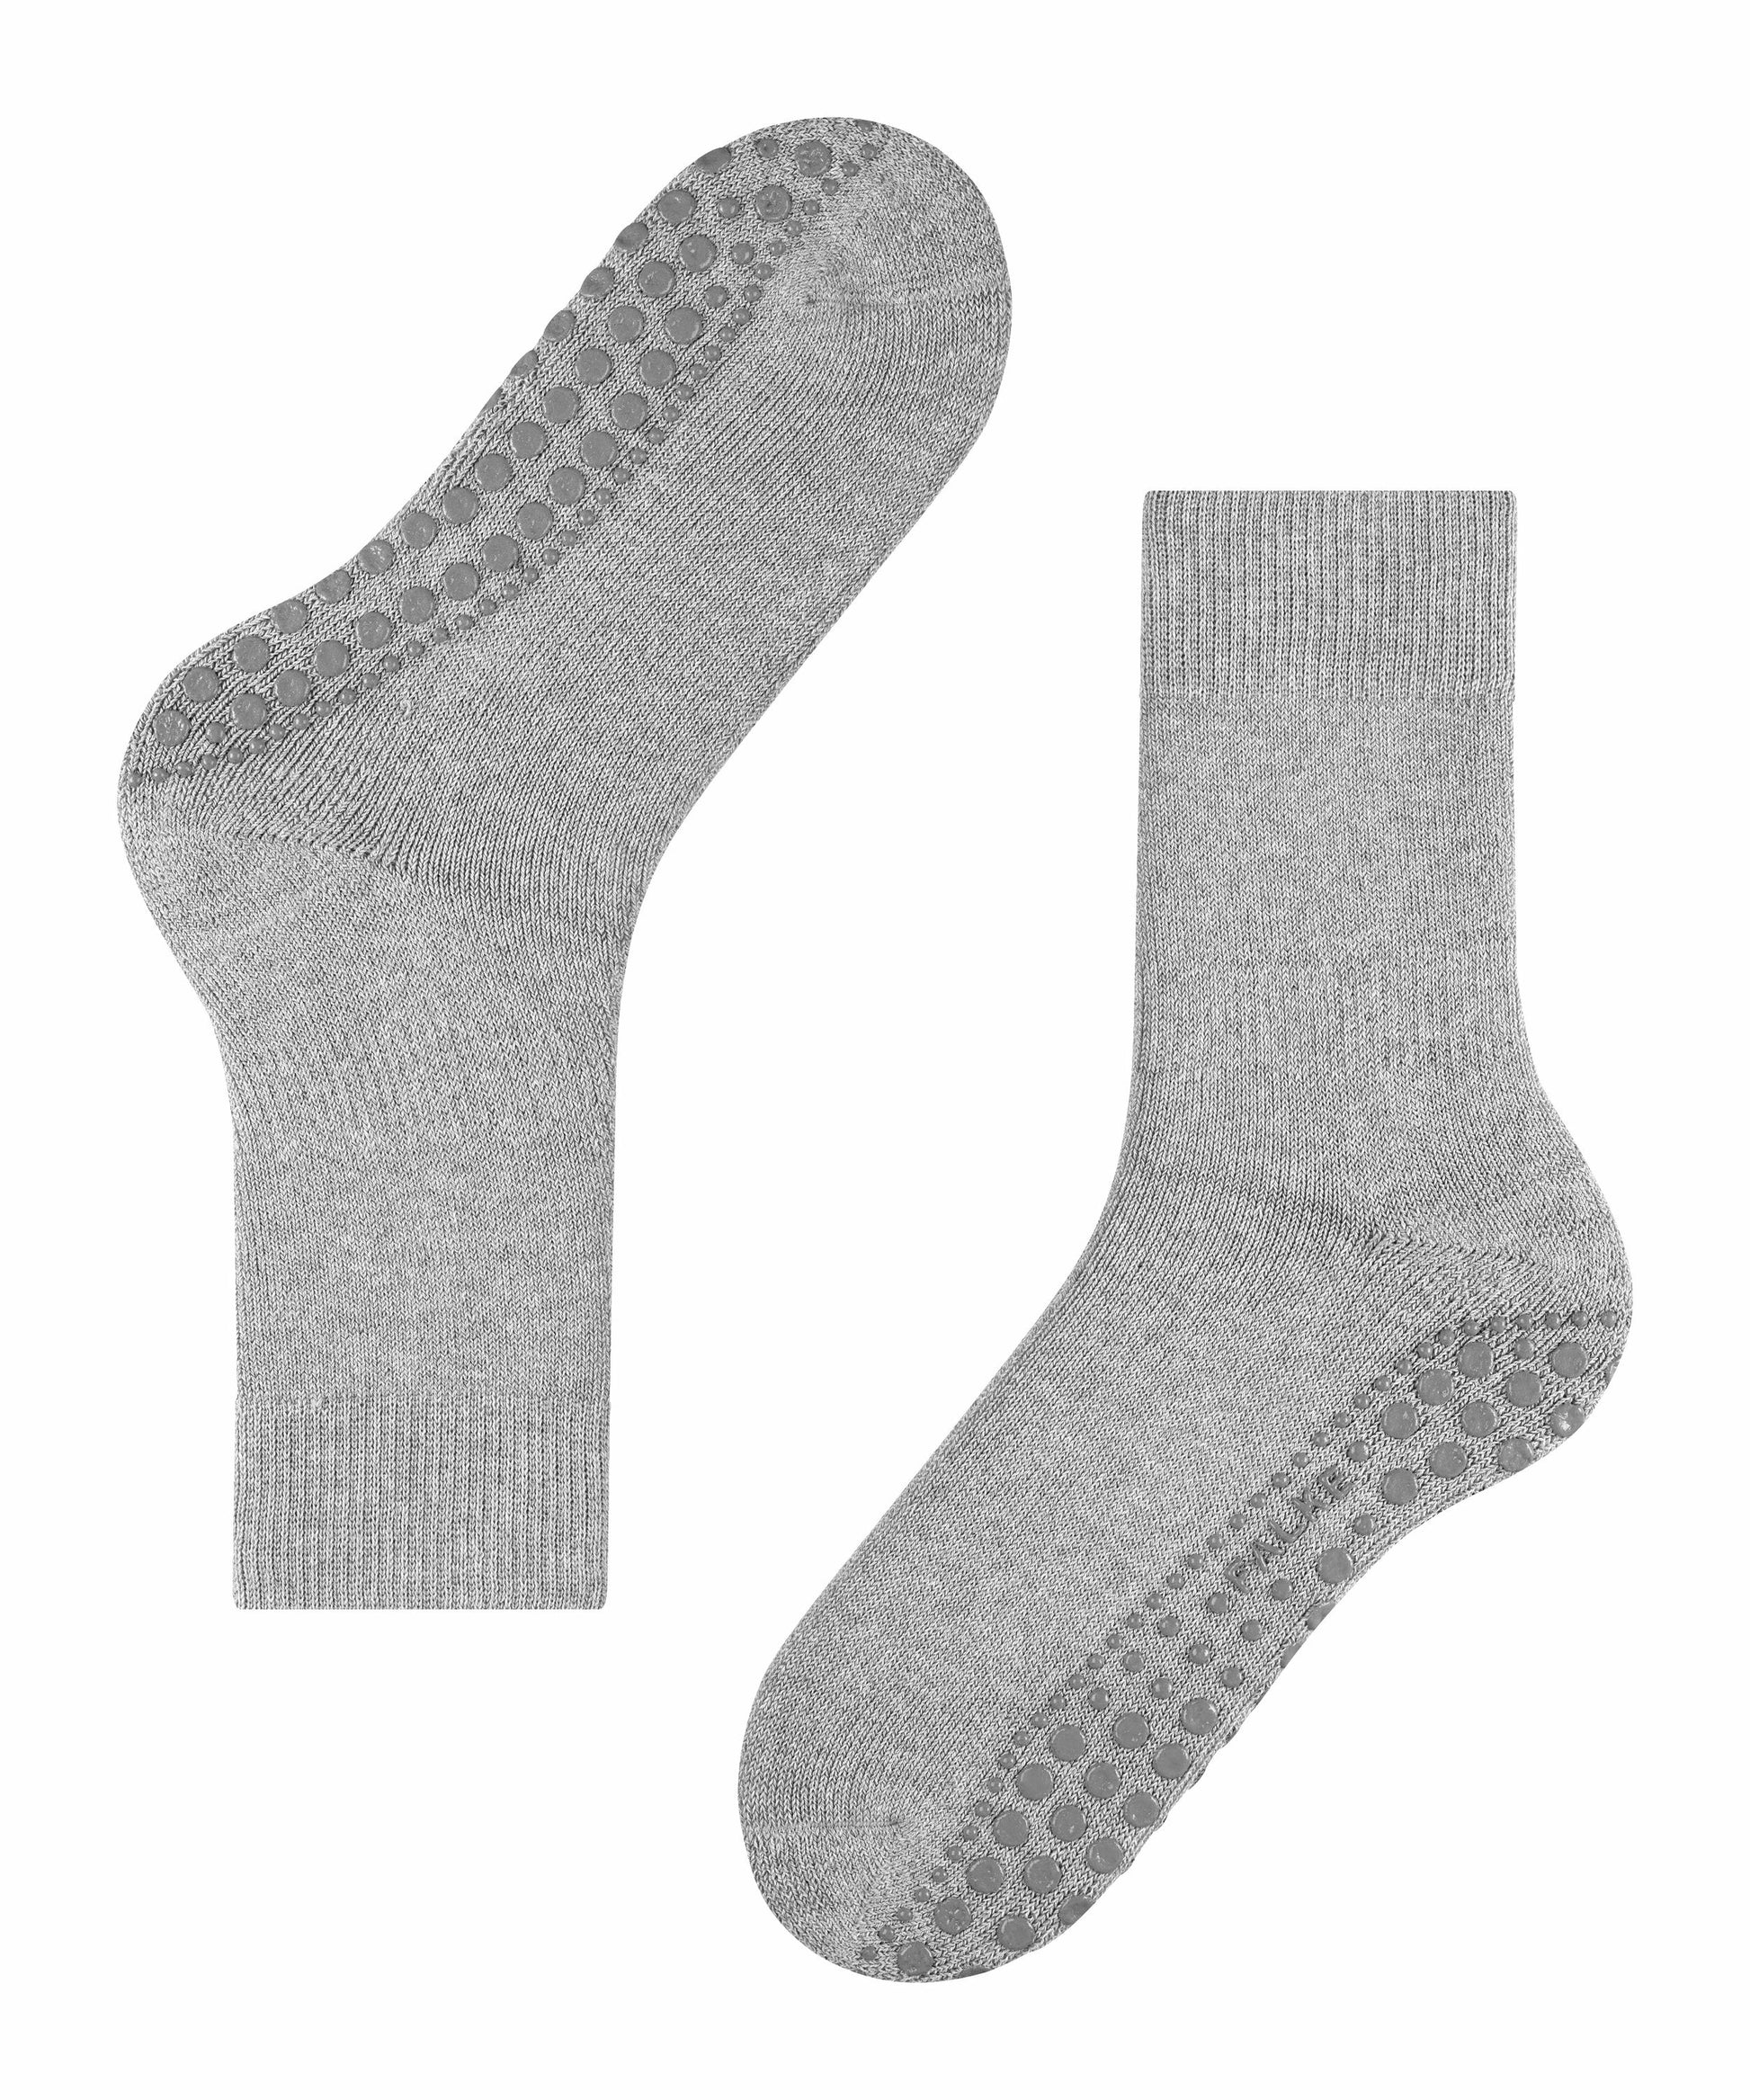 Socken Homepads (Light Grey)